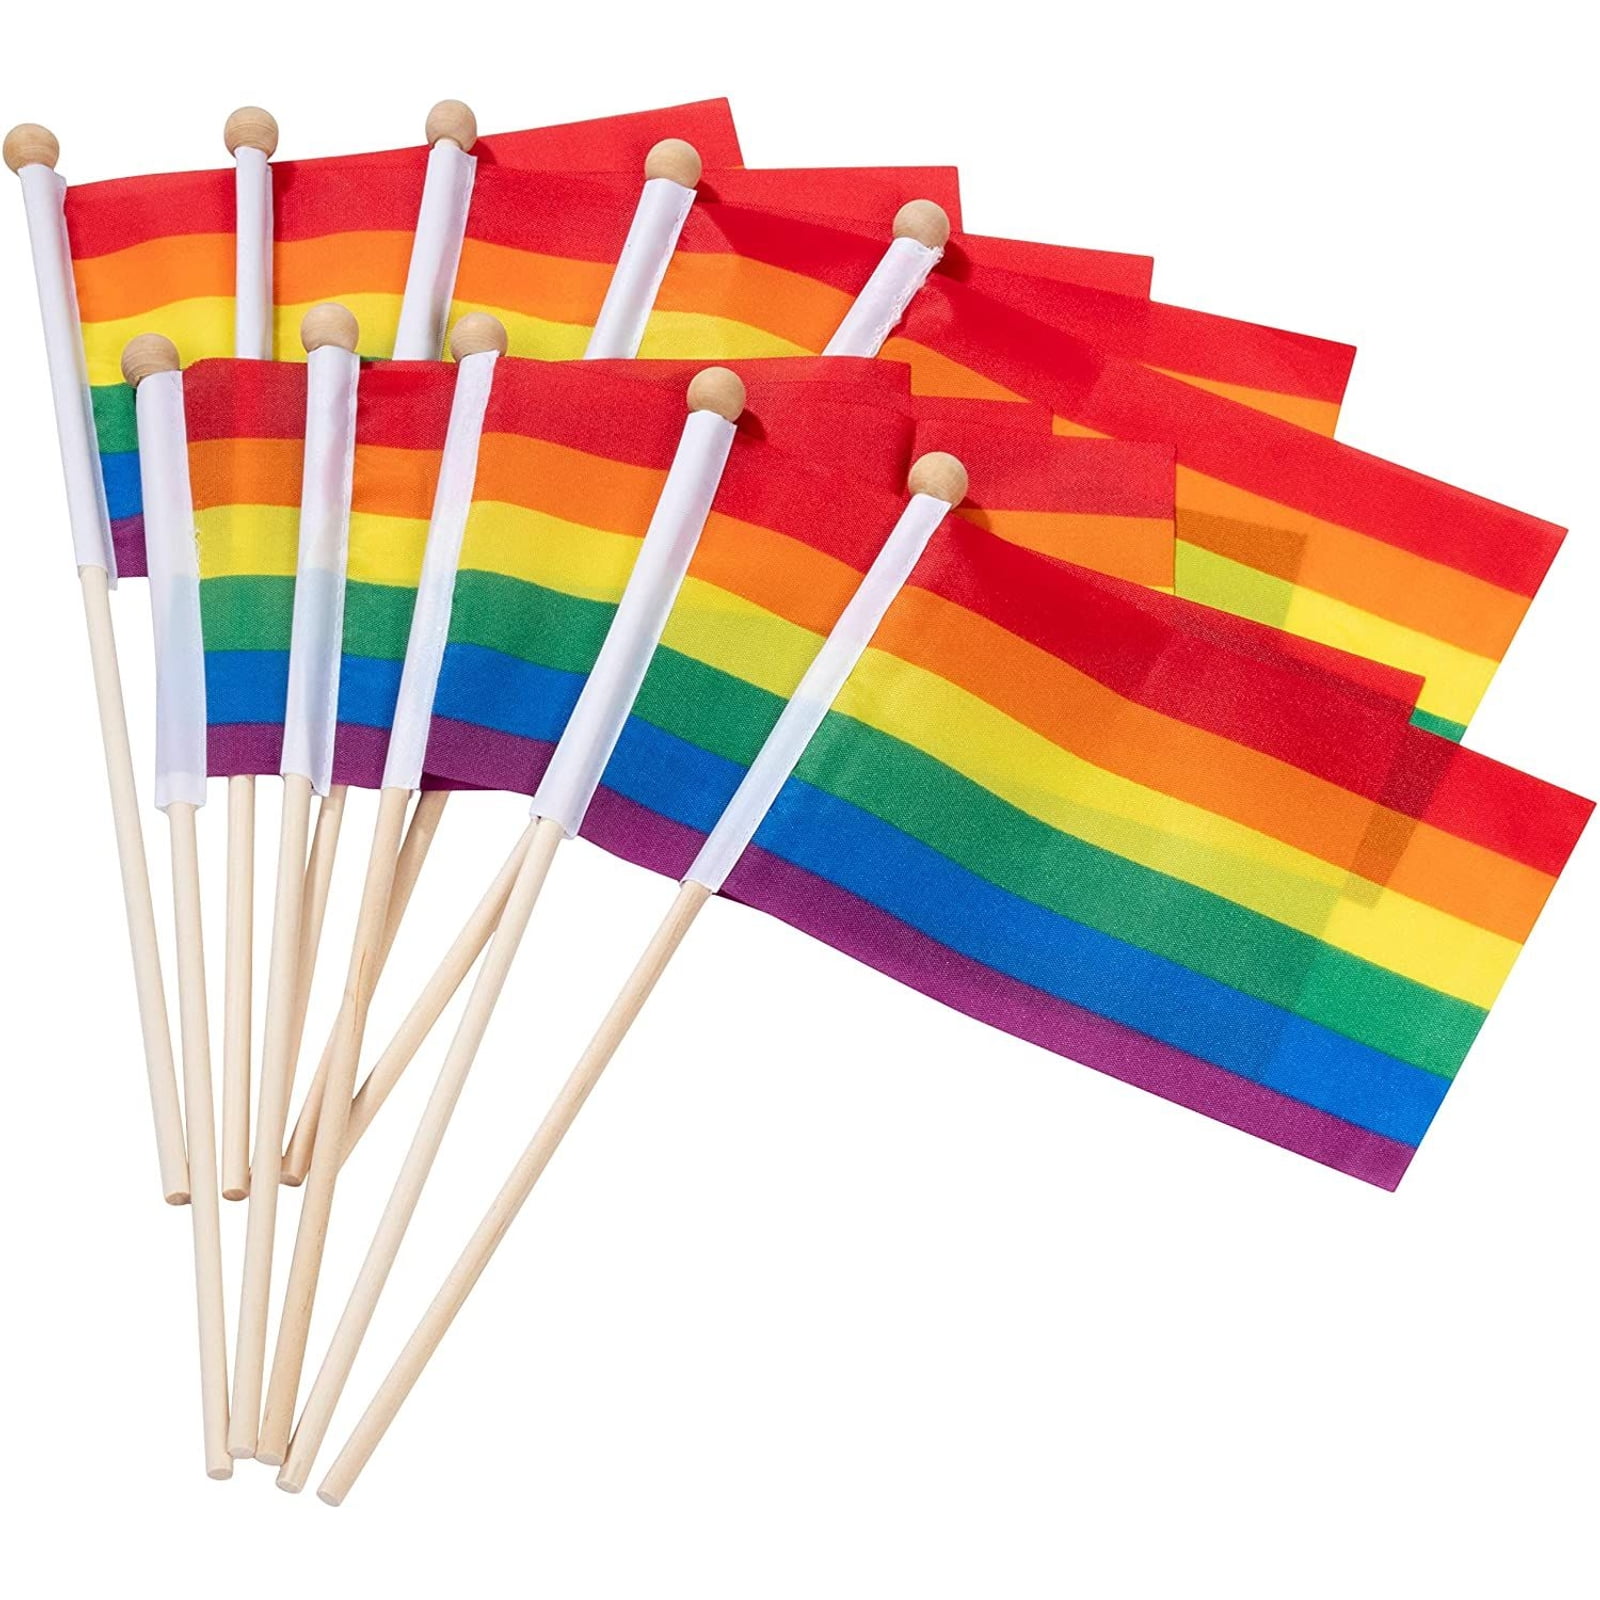 8.2 x 5.5 inch Small Handheld Rainbow Flag Mardi Gras Rainbow Party Mini LGBT Flag Bunting for LGBT Parades 100 pieces Pride Rainbow Stick Flag